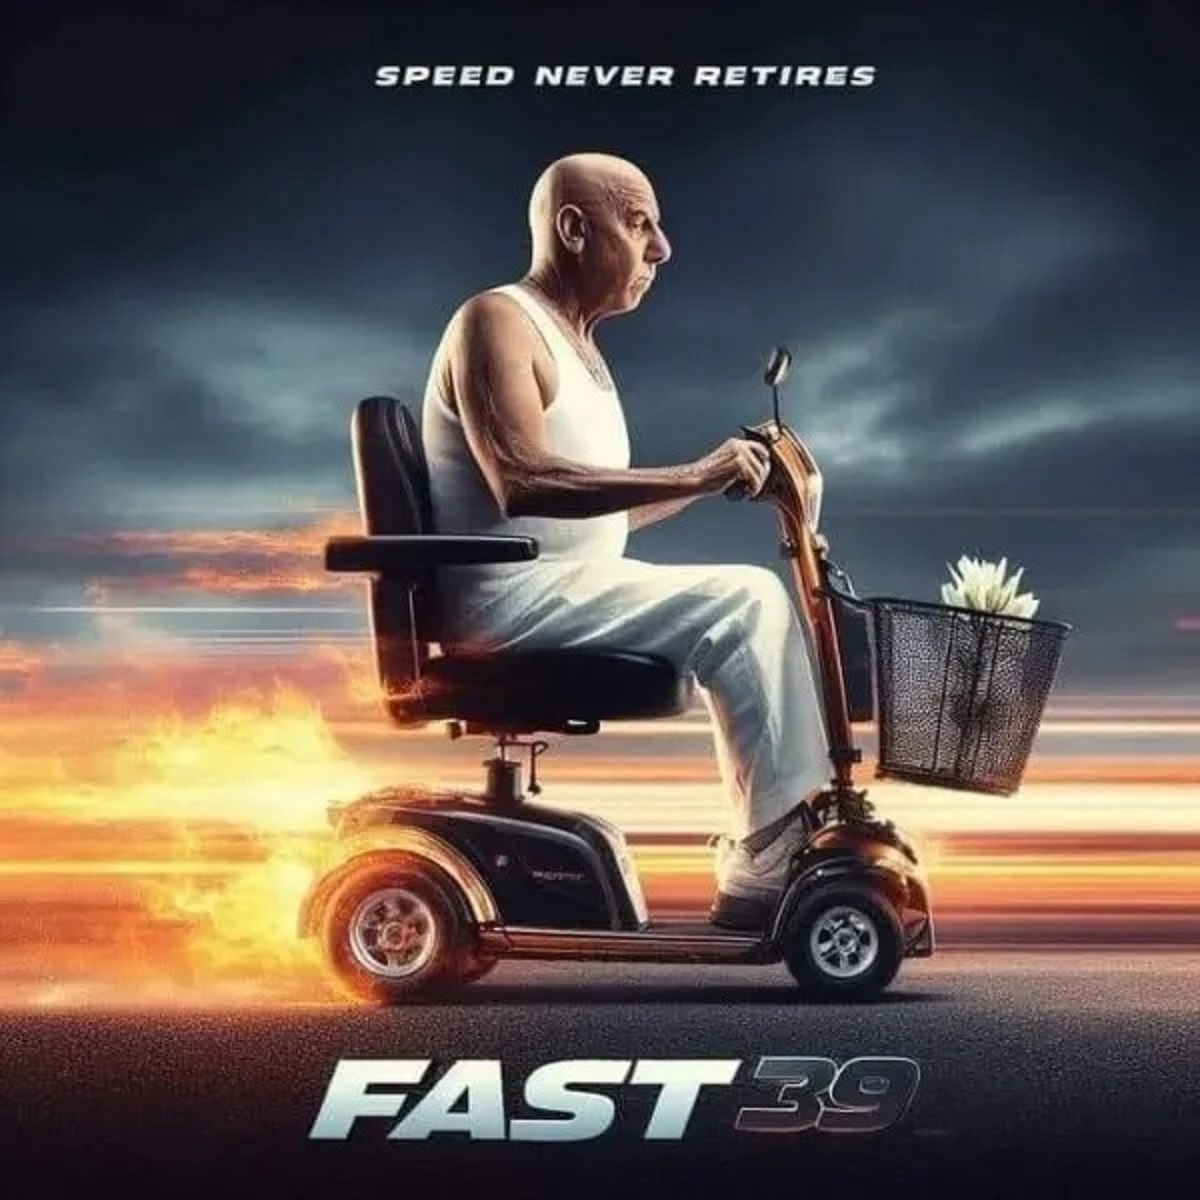 fast 39 speed never retires - Speed Never Retires Fast 39